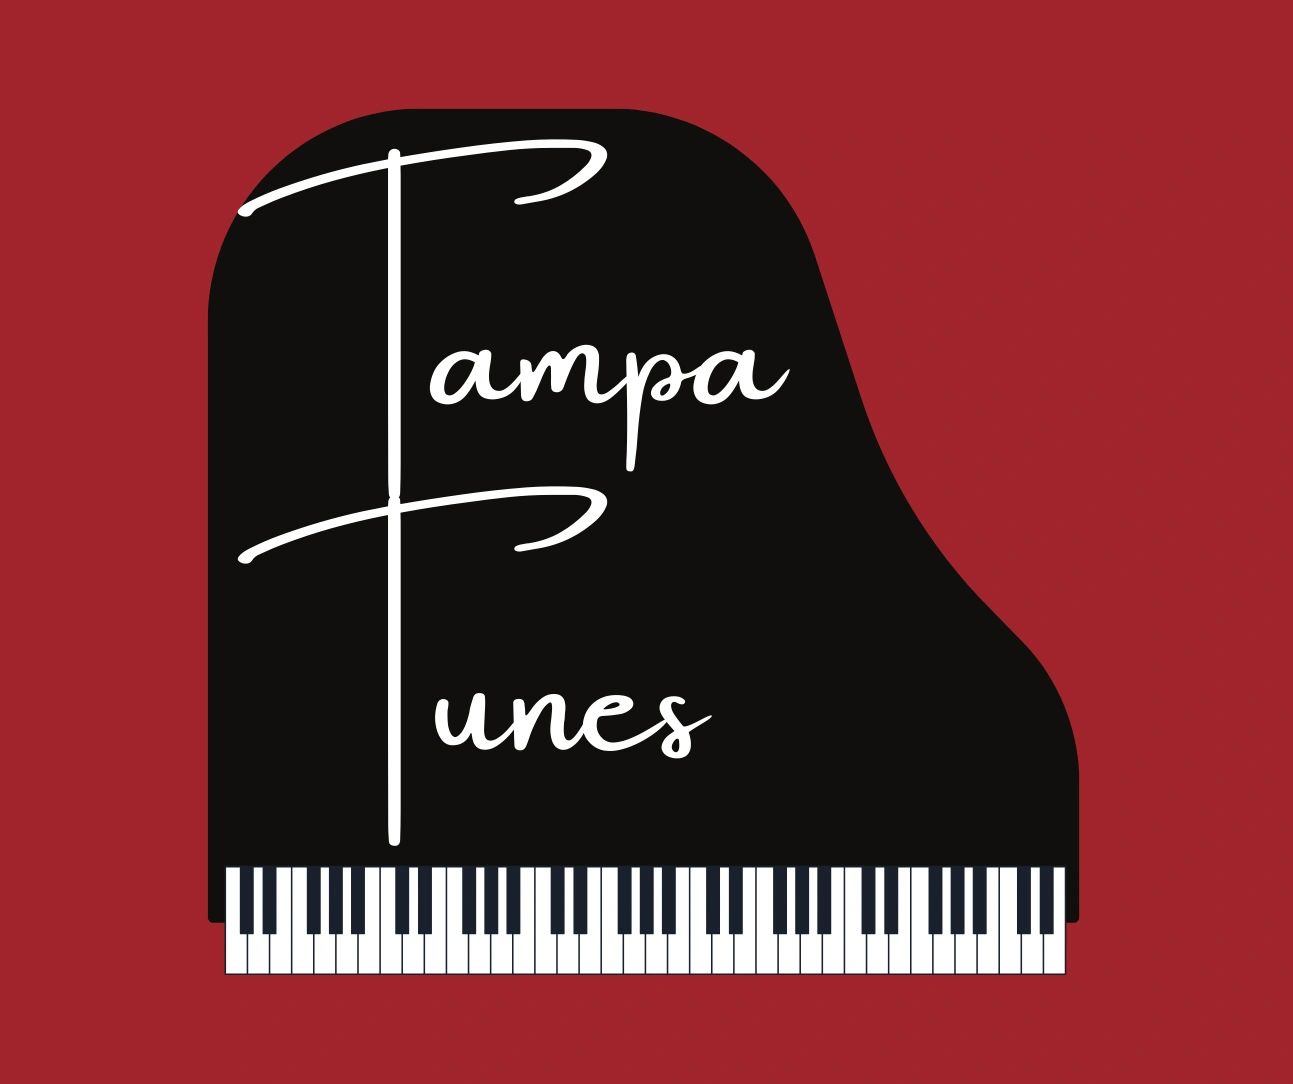 Tampa Tunes:

Public Piano Partnership 